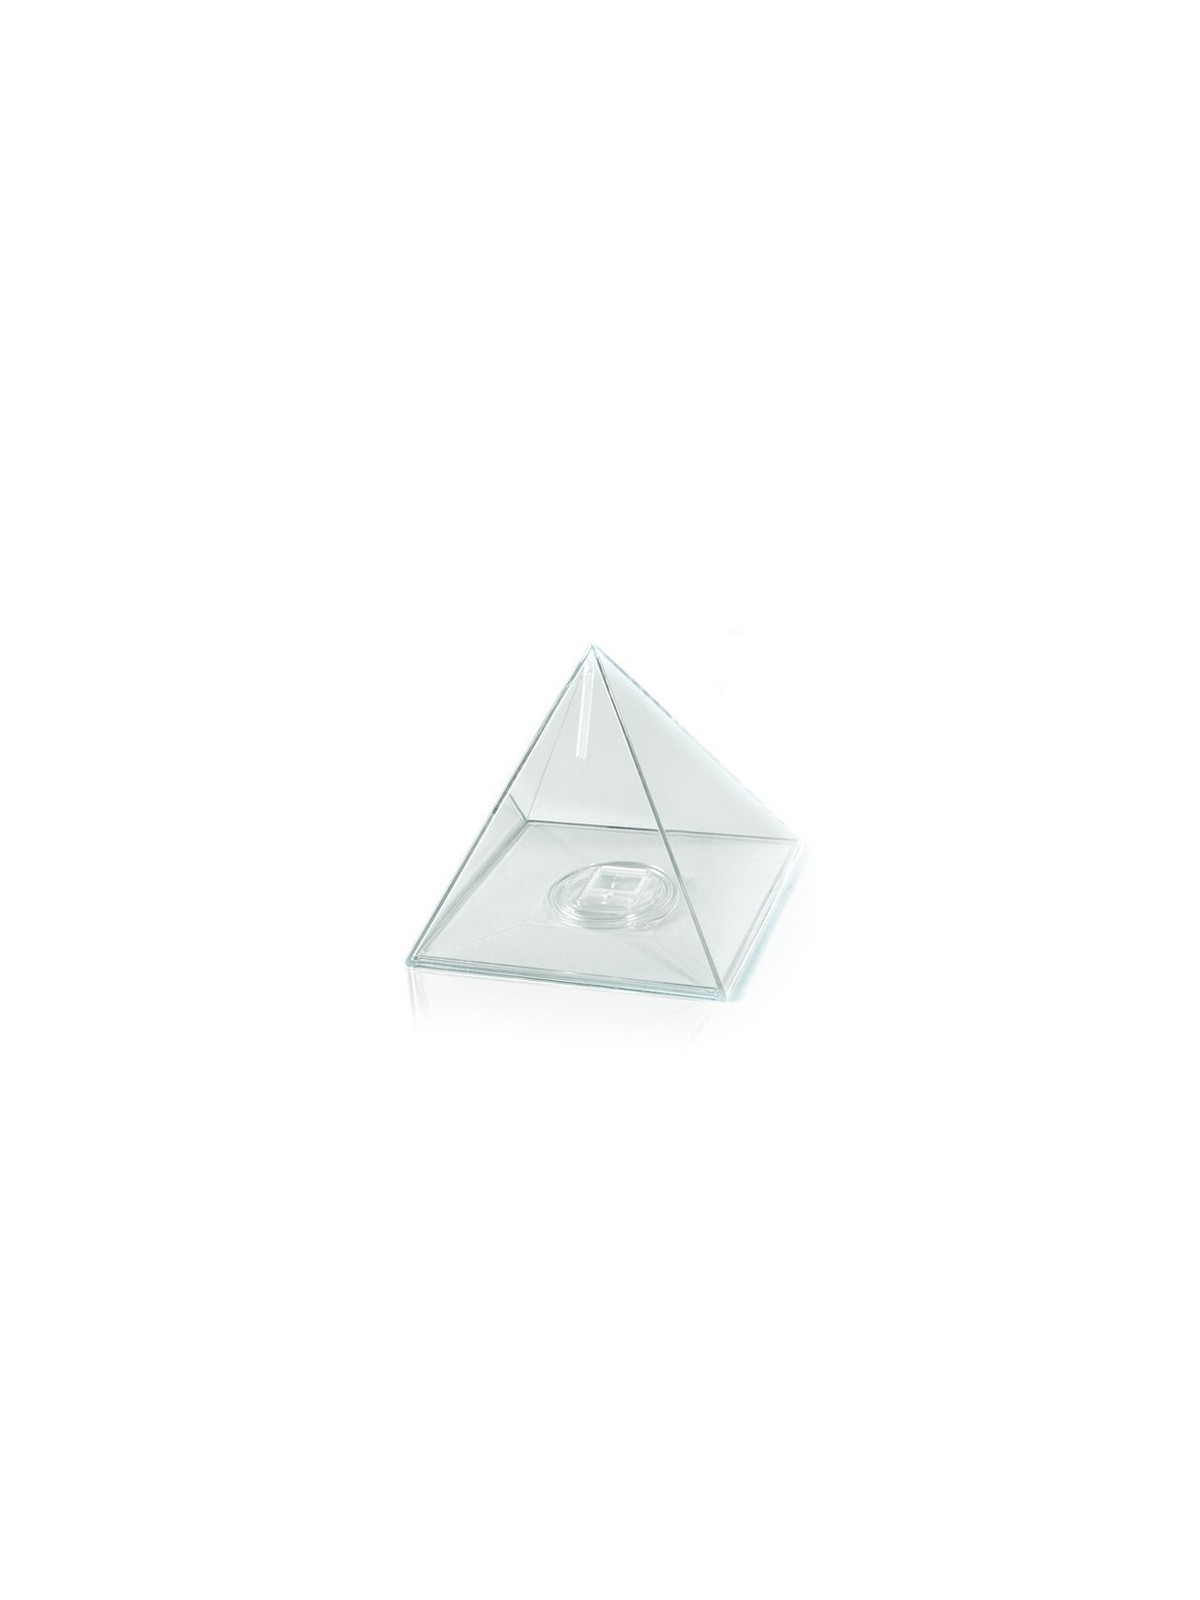 77-014 Tirelire pyramide personnalisé